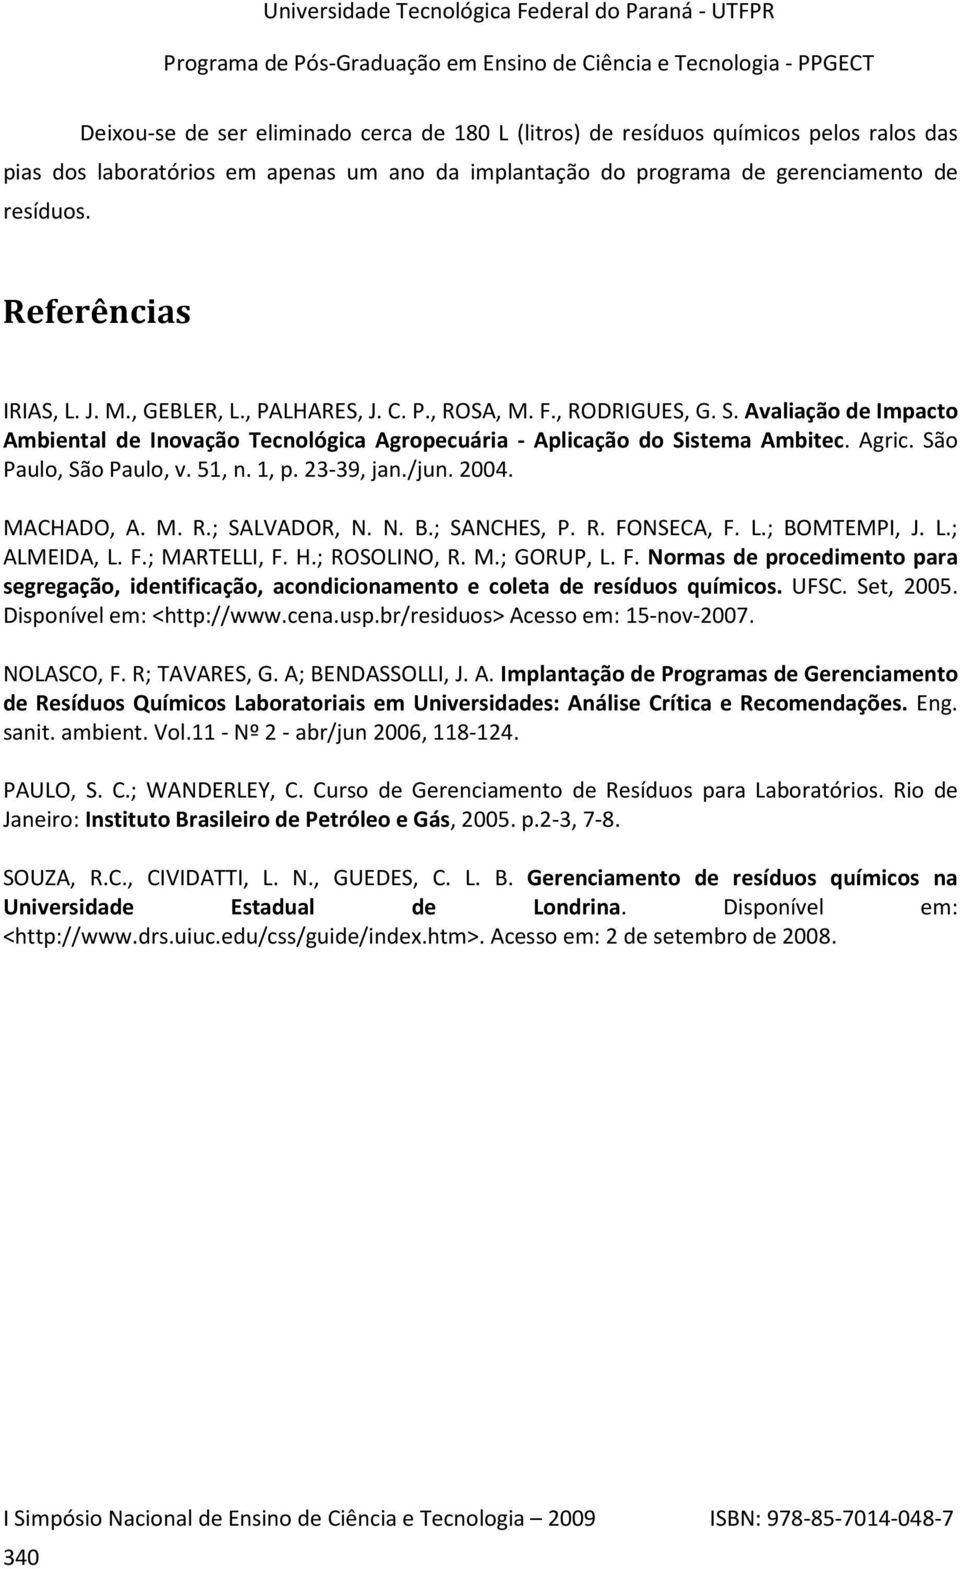 São Paulo, São Paulo, v. 51, n. 1, p. 23-39, jan./jun. 2004. MACHADO, A. M. R.; SALVADOR, N. N. B.; SANCHES, P. R. FONSECA, F. L.; BOMTEMPI, J. L.; ALMEIDA, L. F.; MARTELLI, F. H.; ROSOLINO, R. M.; GORUP, L.